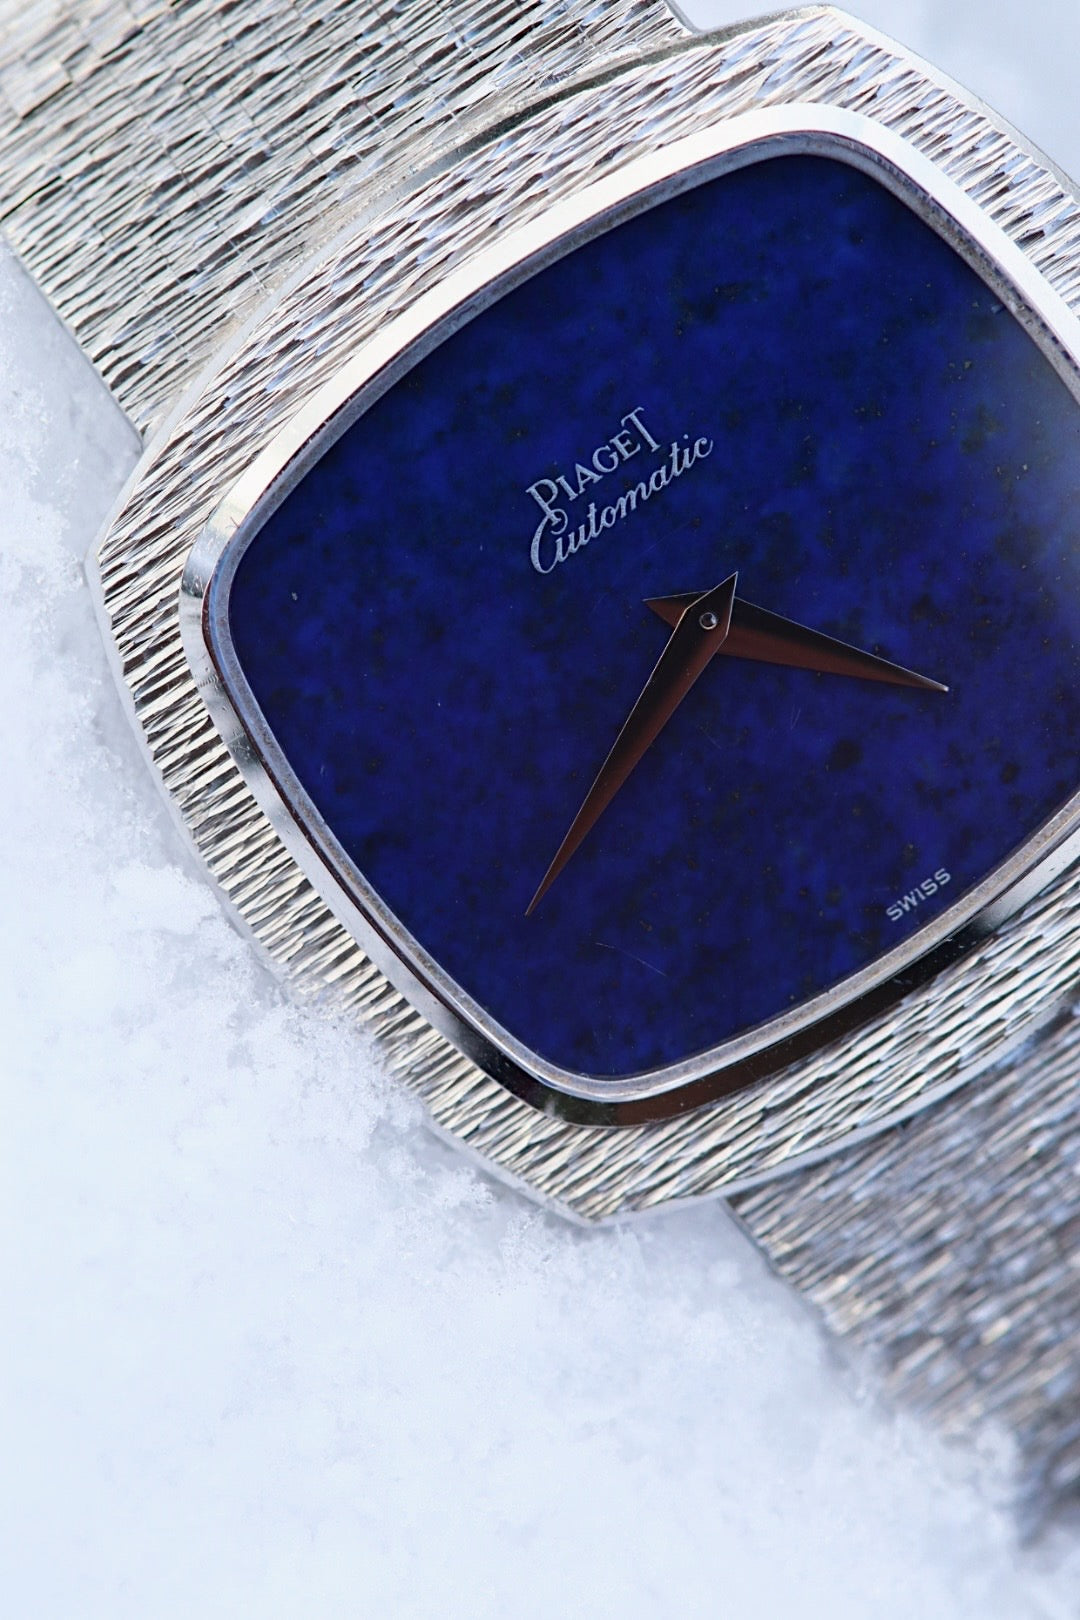 Montre Piaget 12431 A6 en or blanc, cadran bleu lapis lazuli vintage